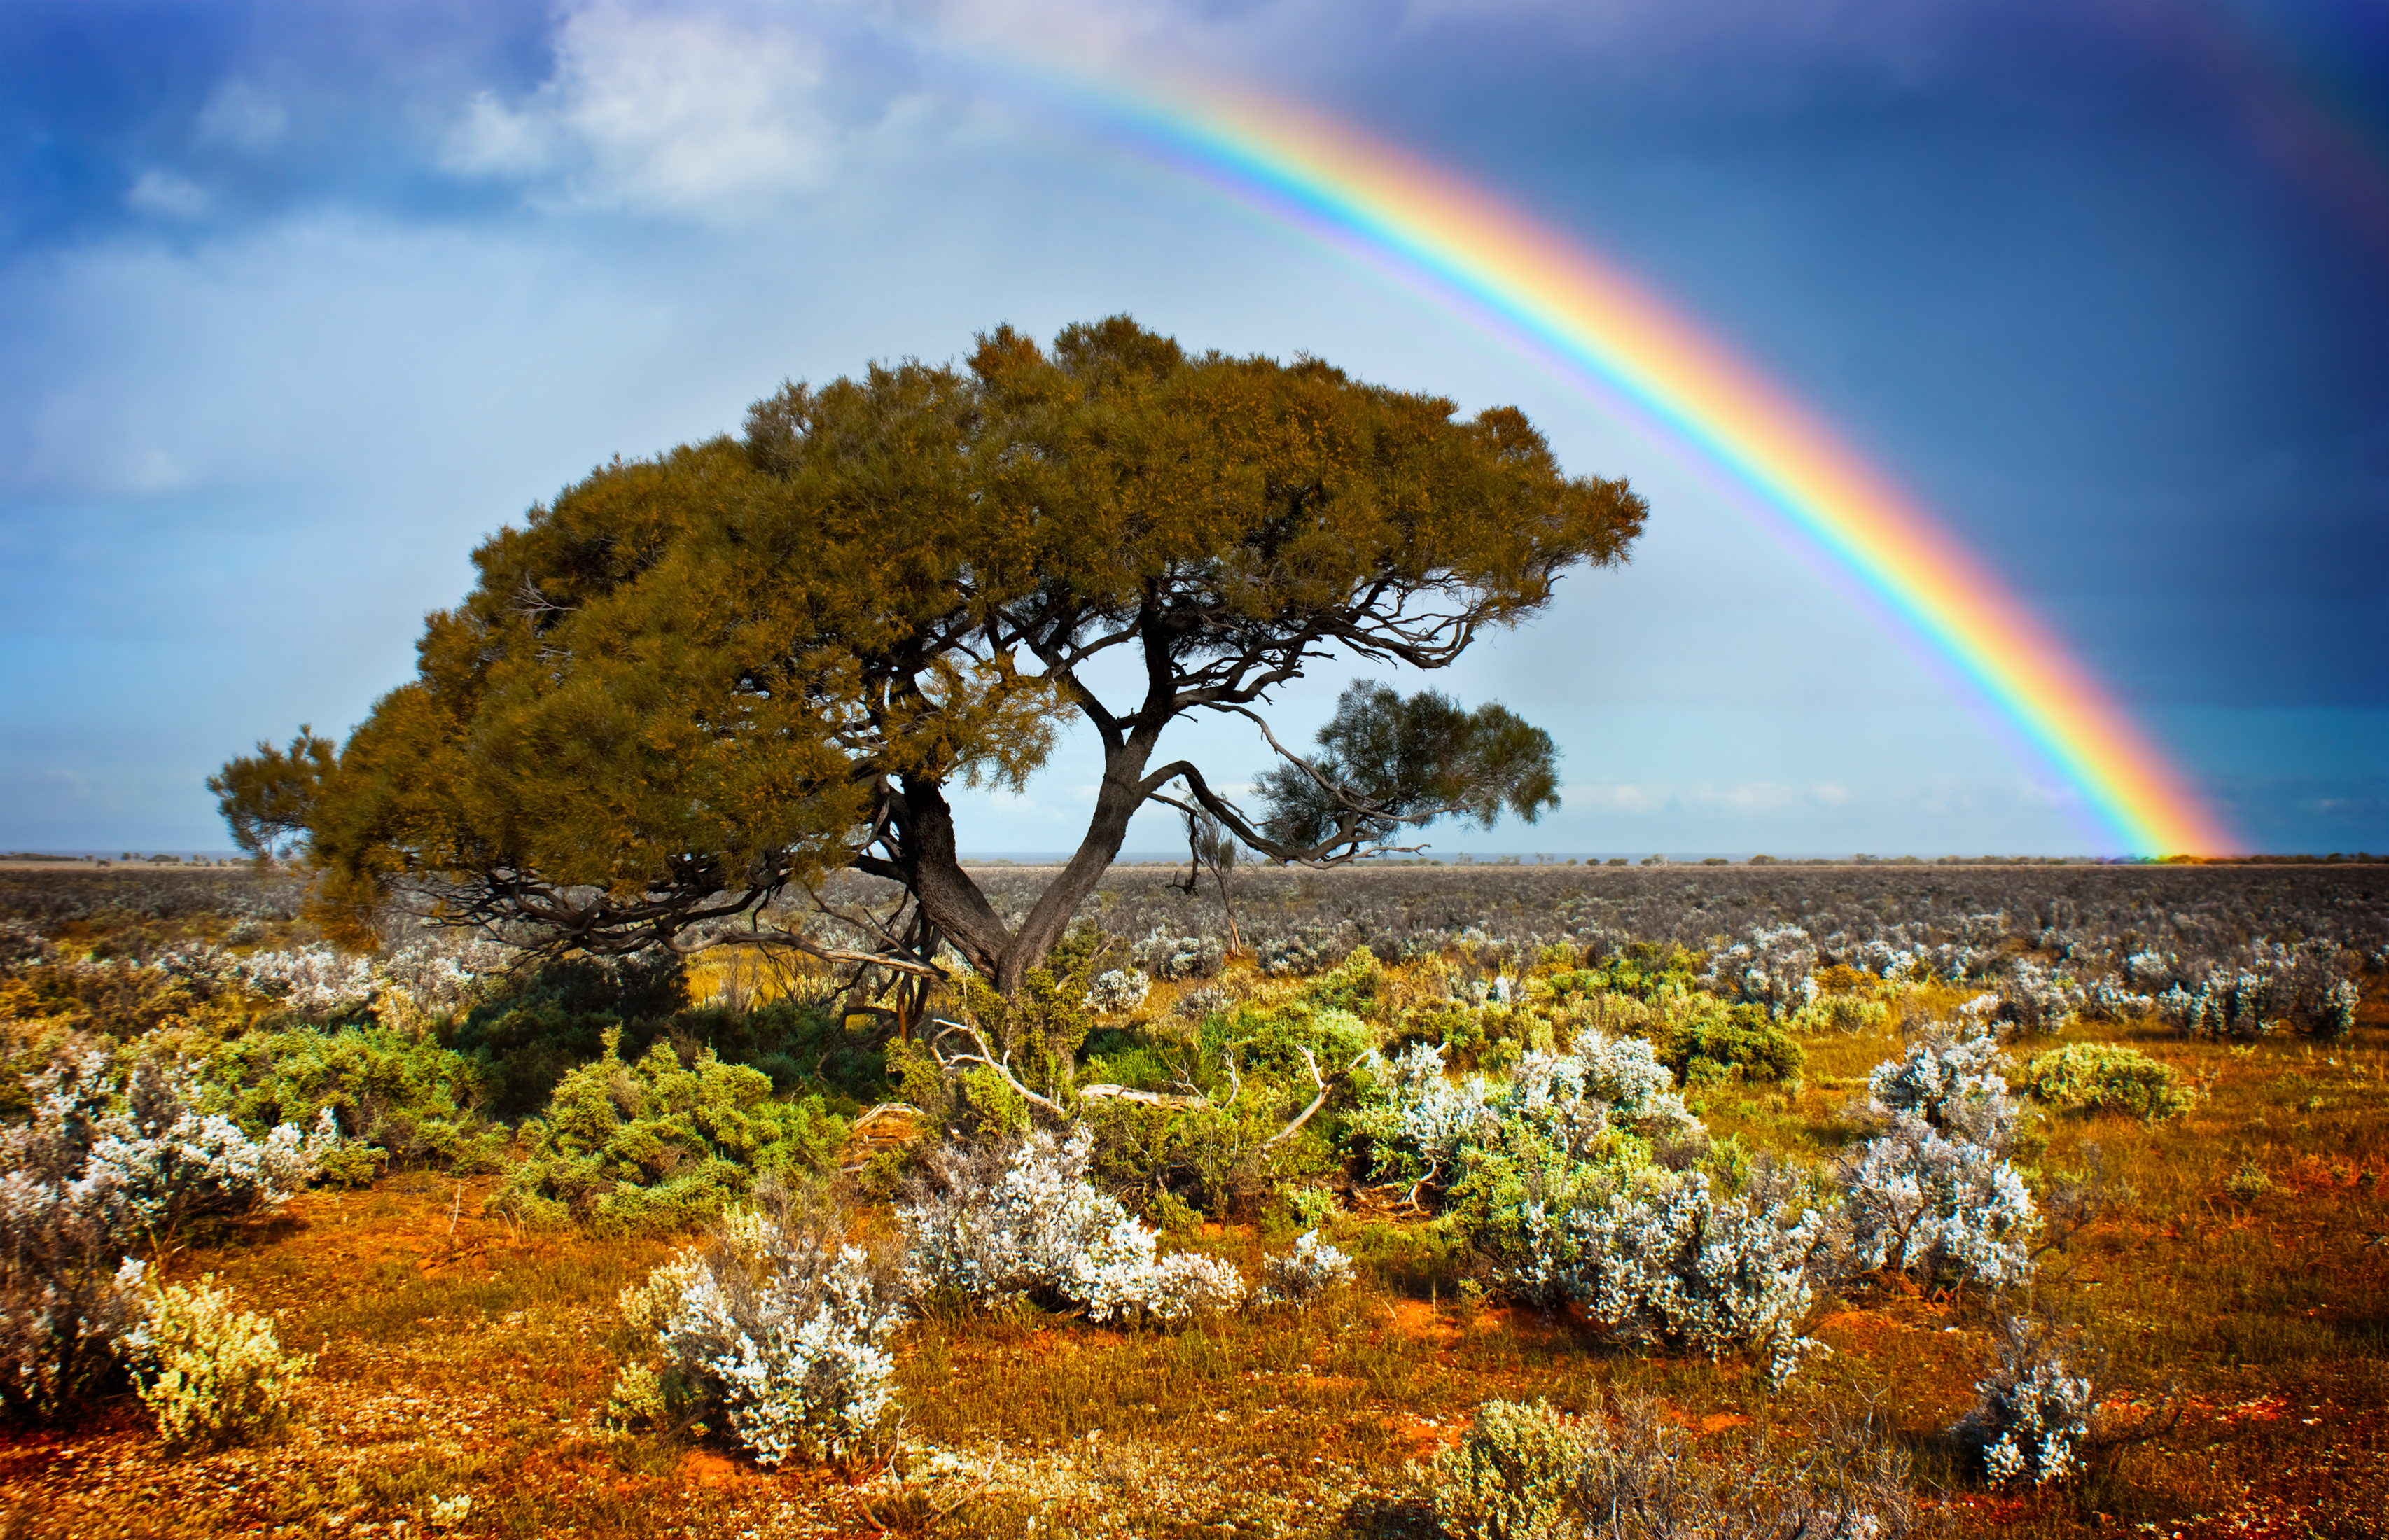 rainbow over tree in desert landscape